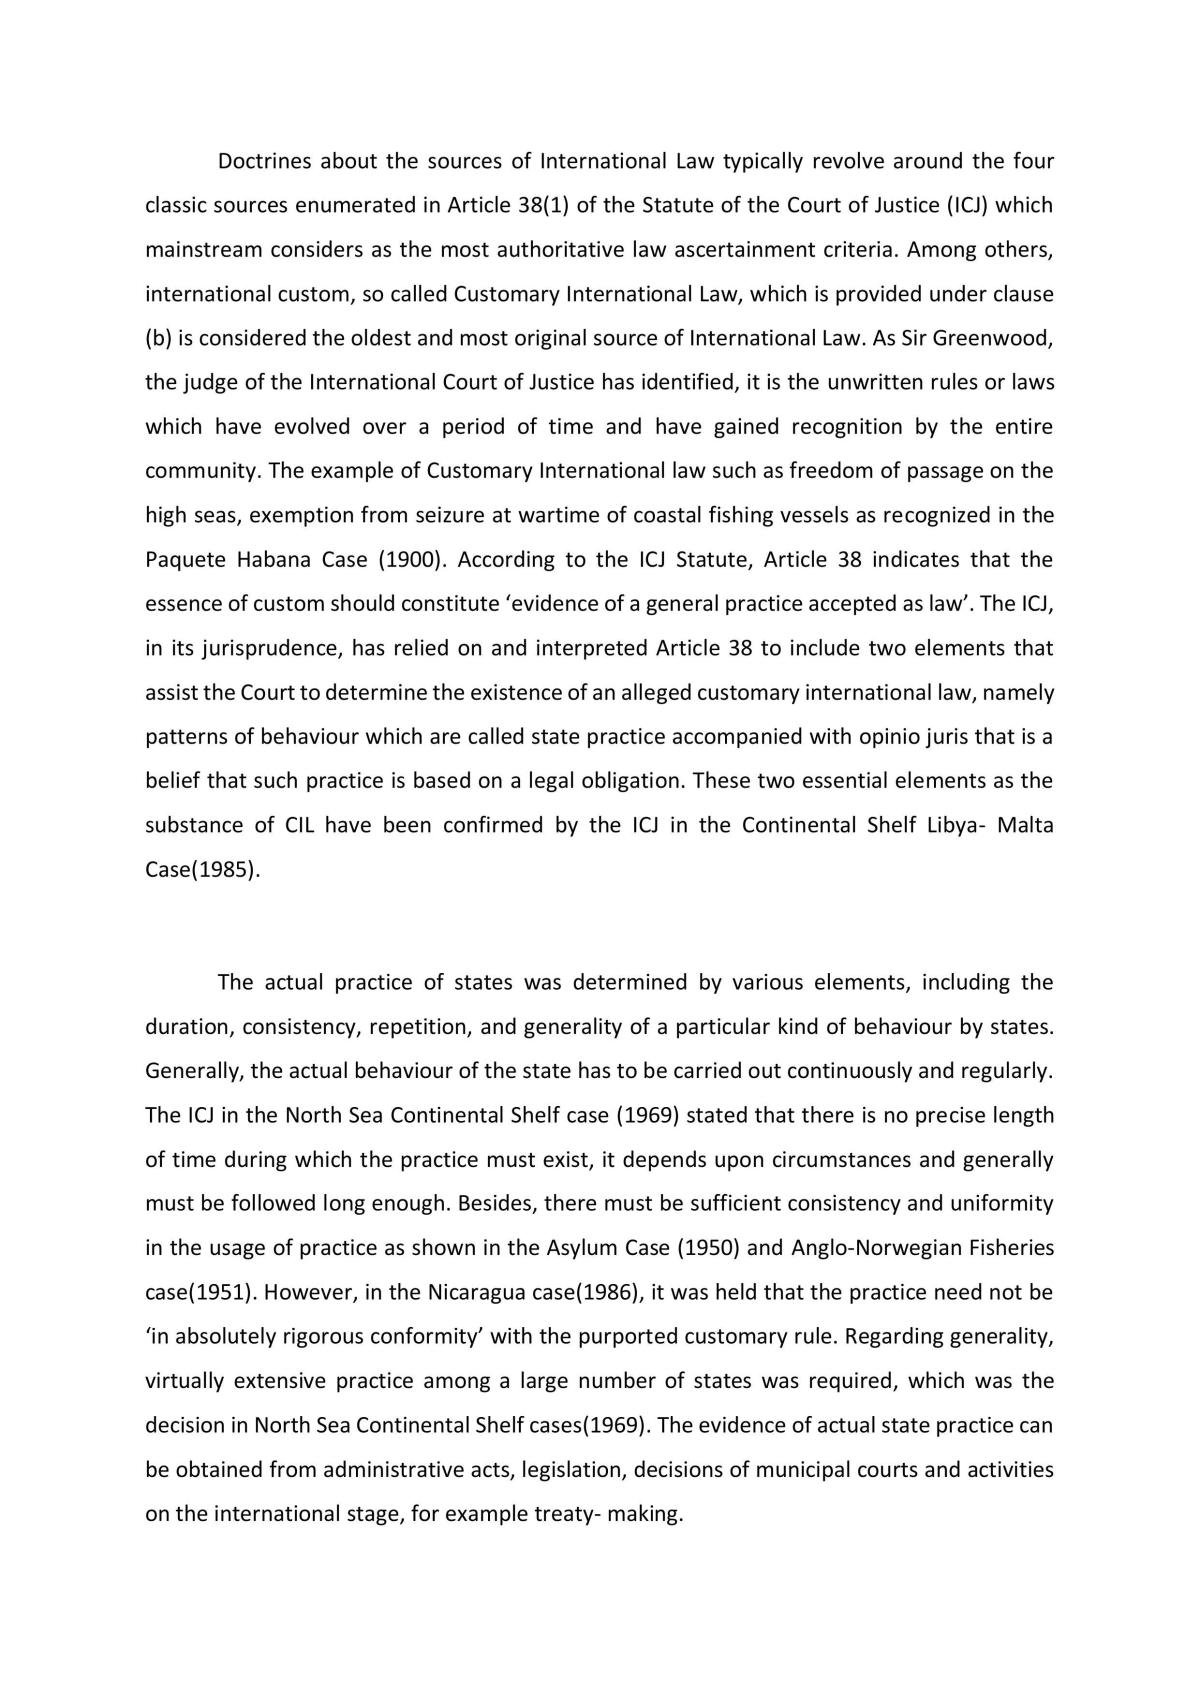 Customary International Law - Page 1